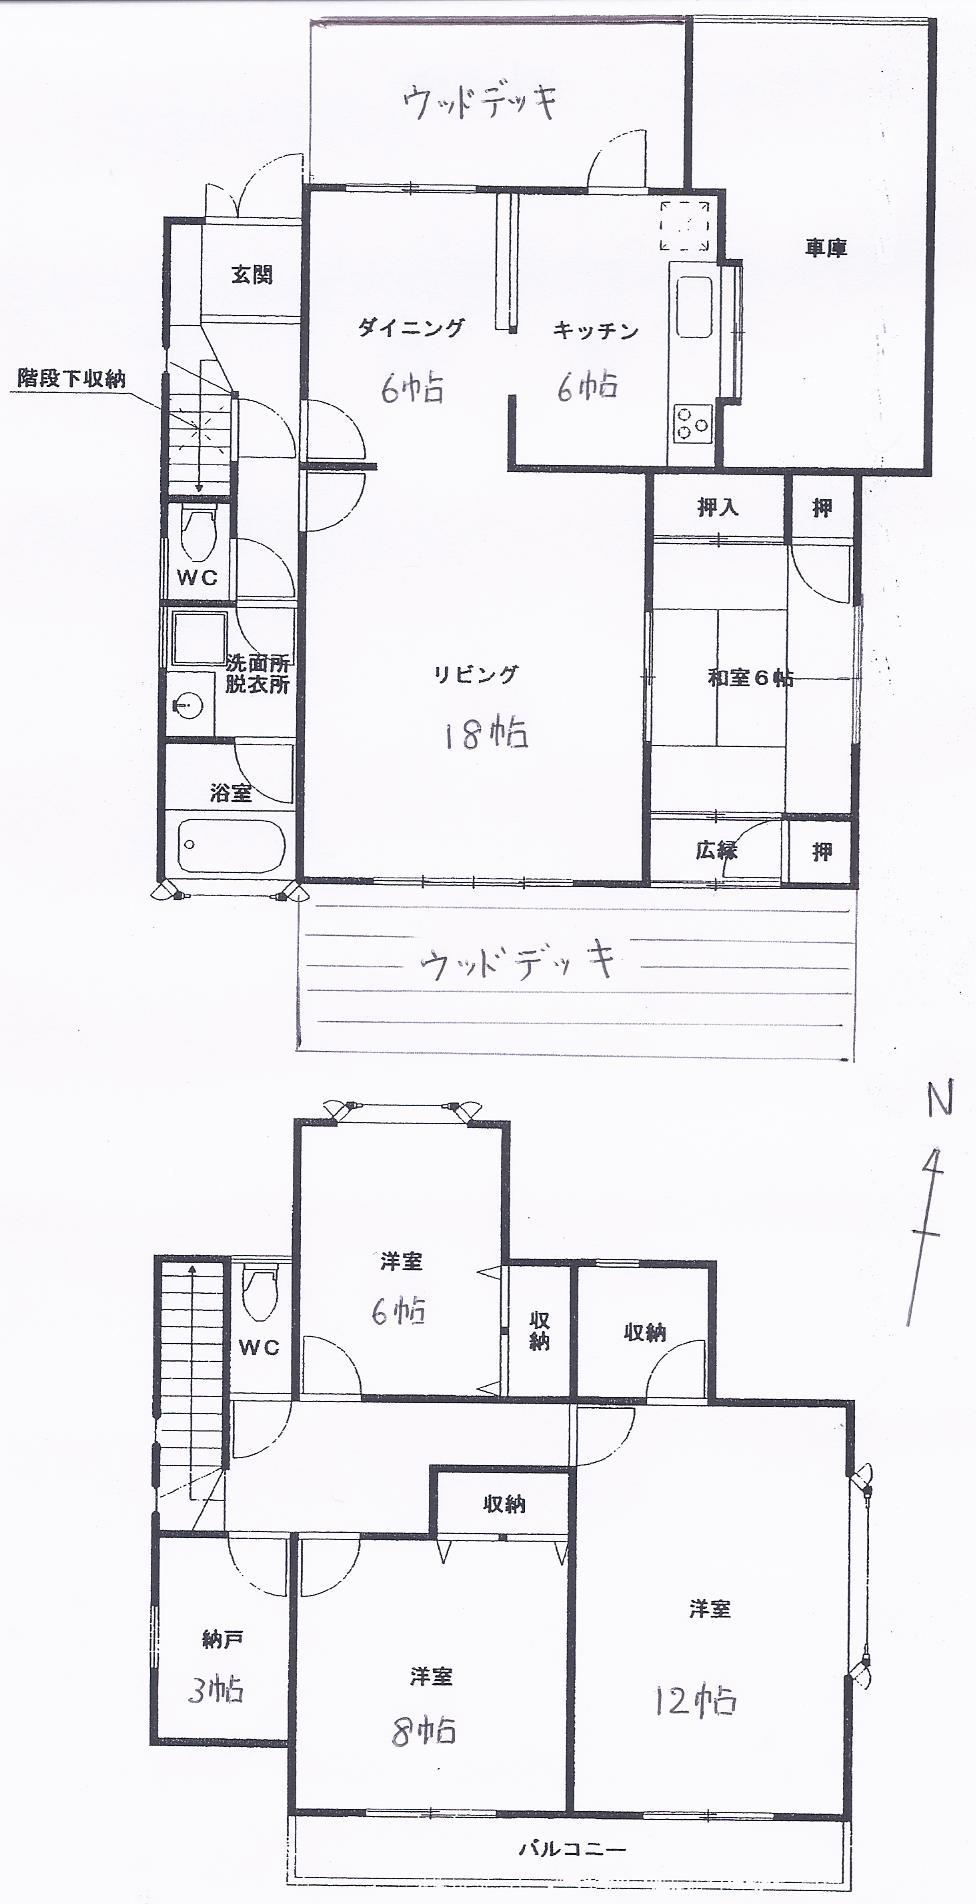 Floor plan. 13.8 million yen, 4LDK + 2S (storeroom), Land area 179.41 sq m , Building area 141.59 sq m